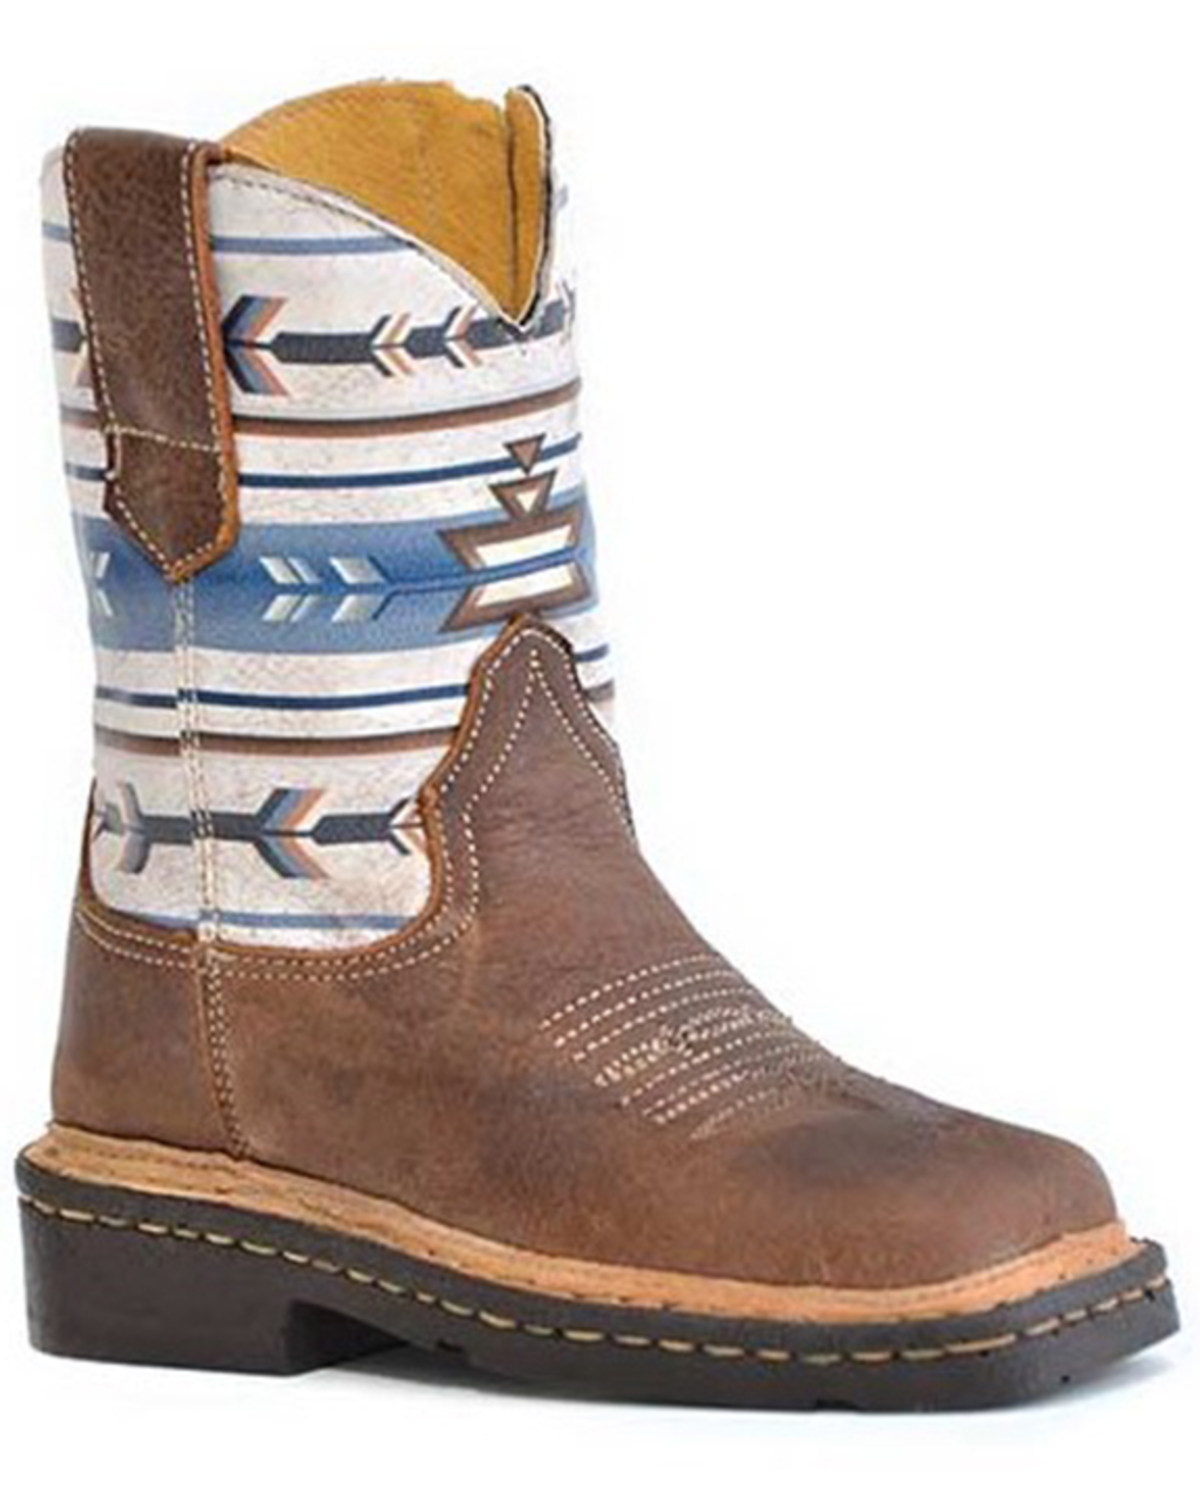 Roper Little Boys' Cowboy Southwestern Boots - Broad Square Toe